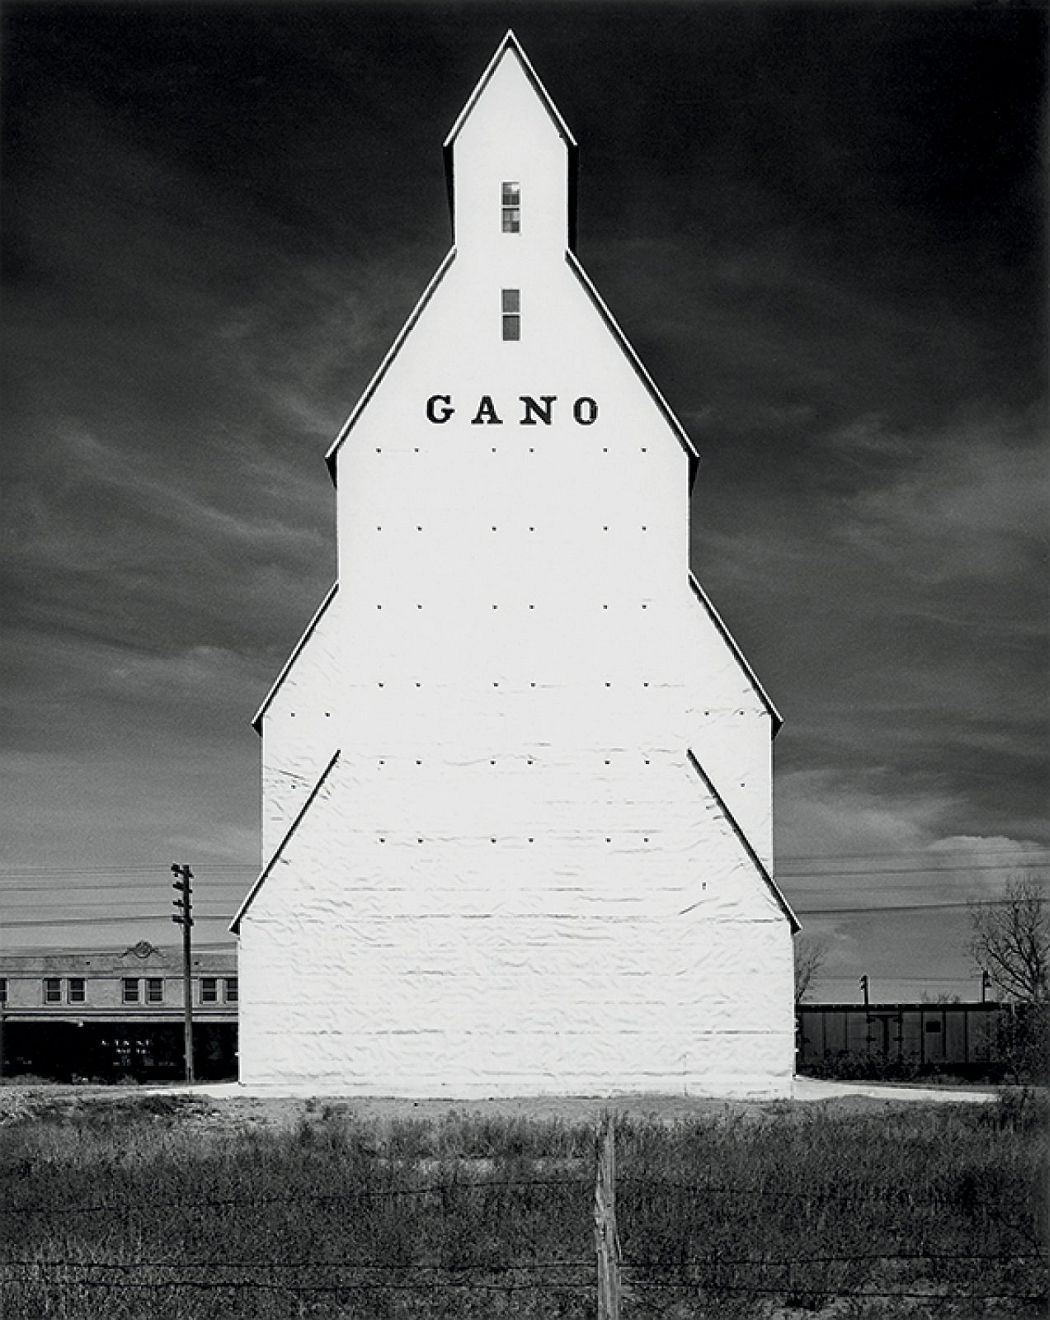 Wright Morris, “Gano” Grain Elevator, Kinsley, Kansas, 1940 © Estate of Wright Morris